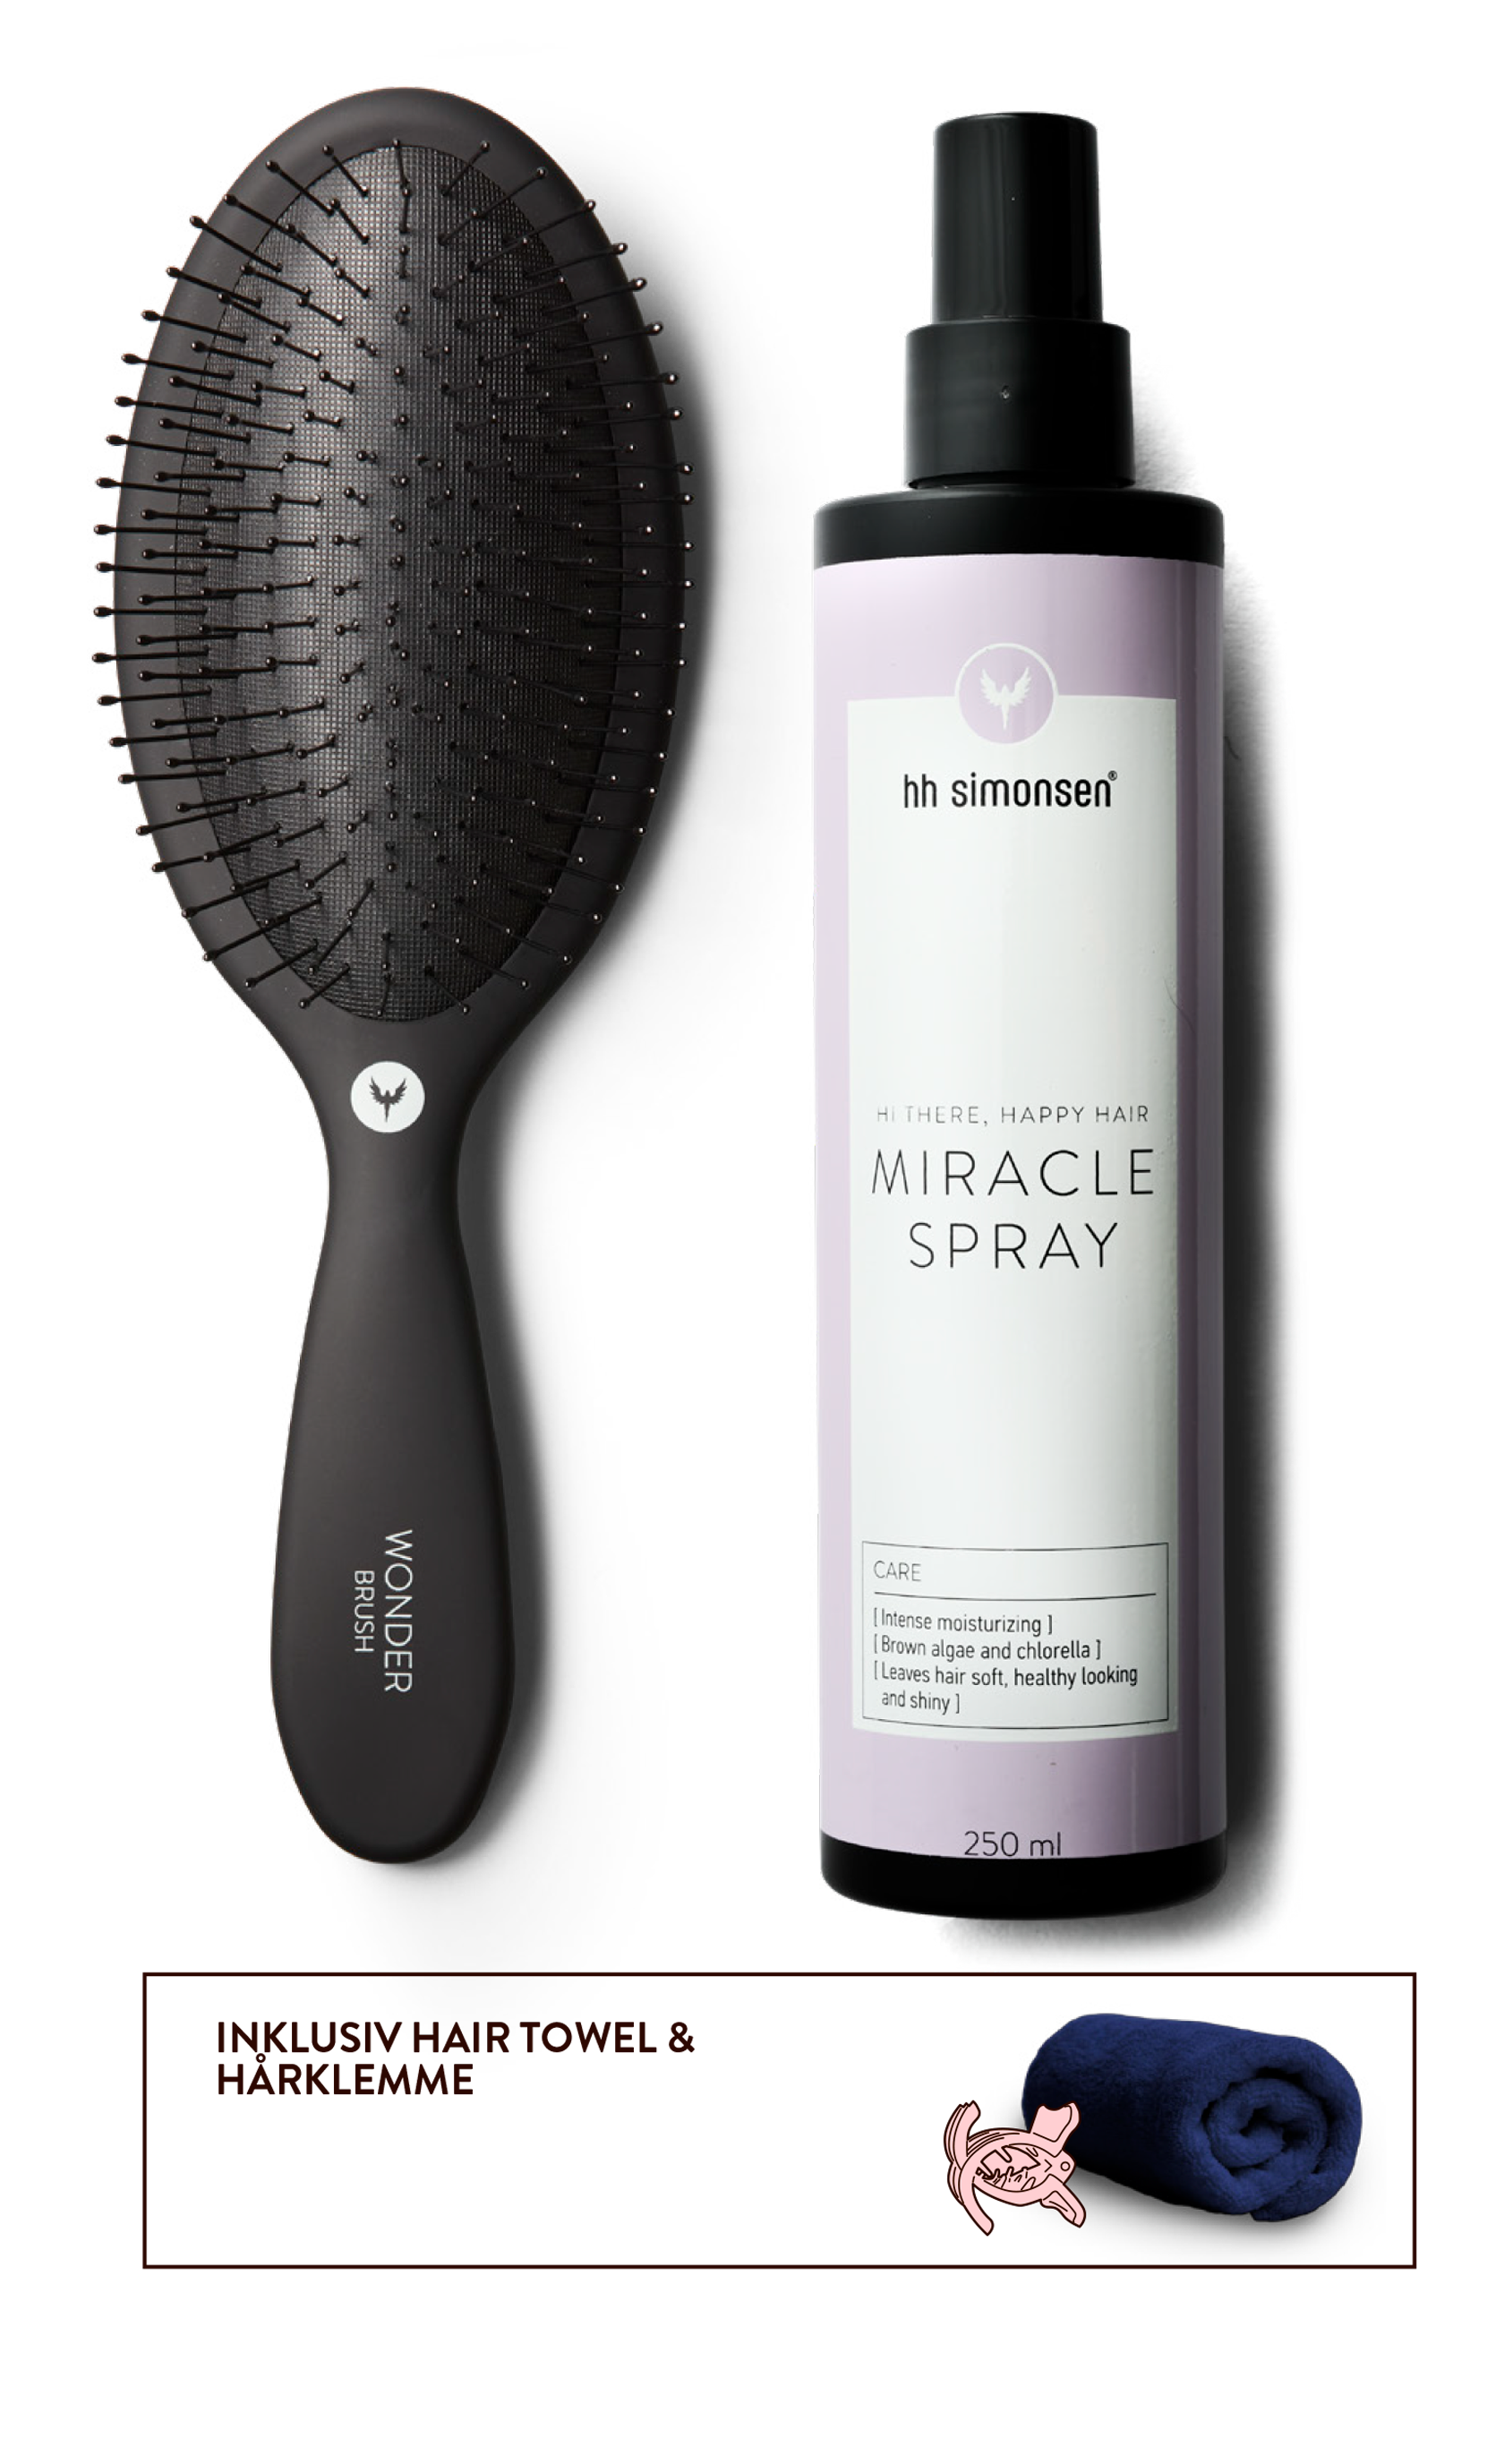 HH Simonsen Miracle Spray + Wonder Brush (1 stk)